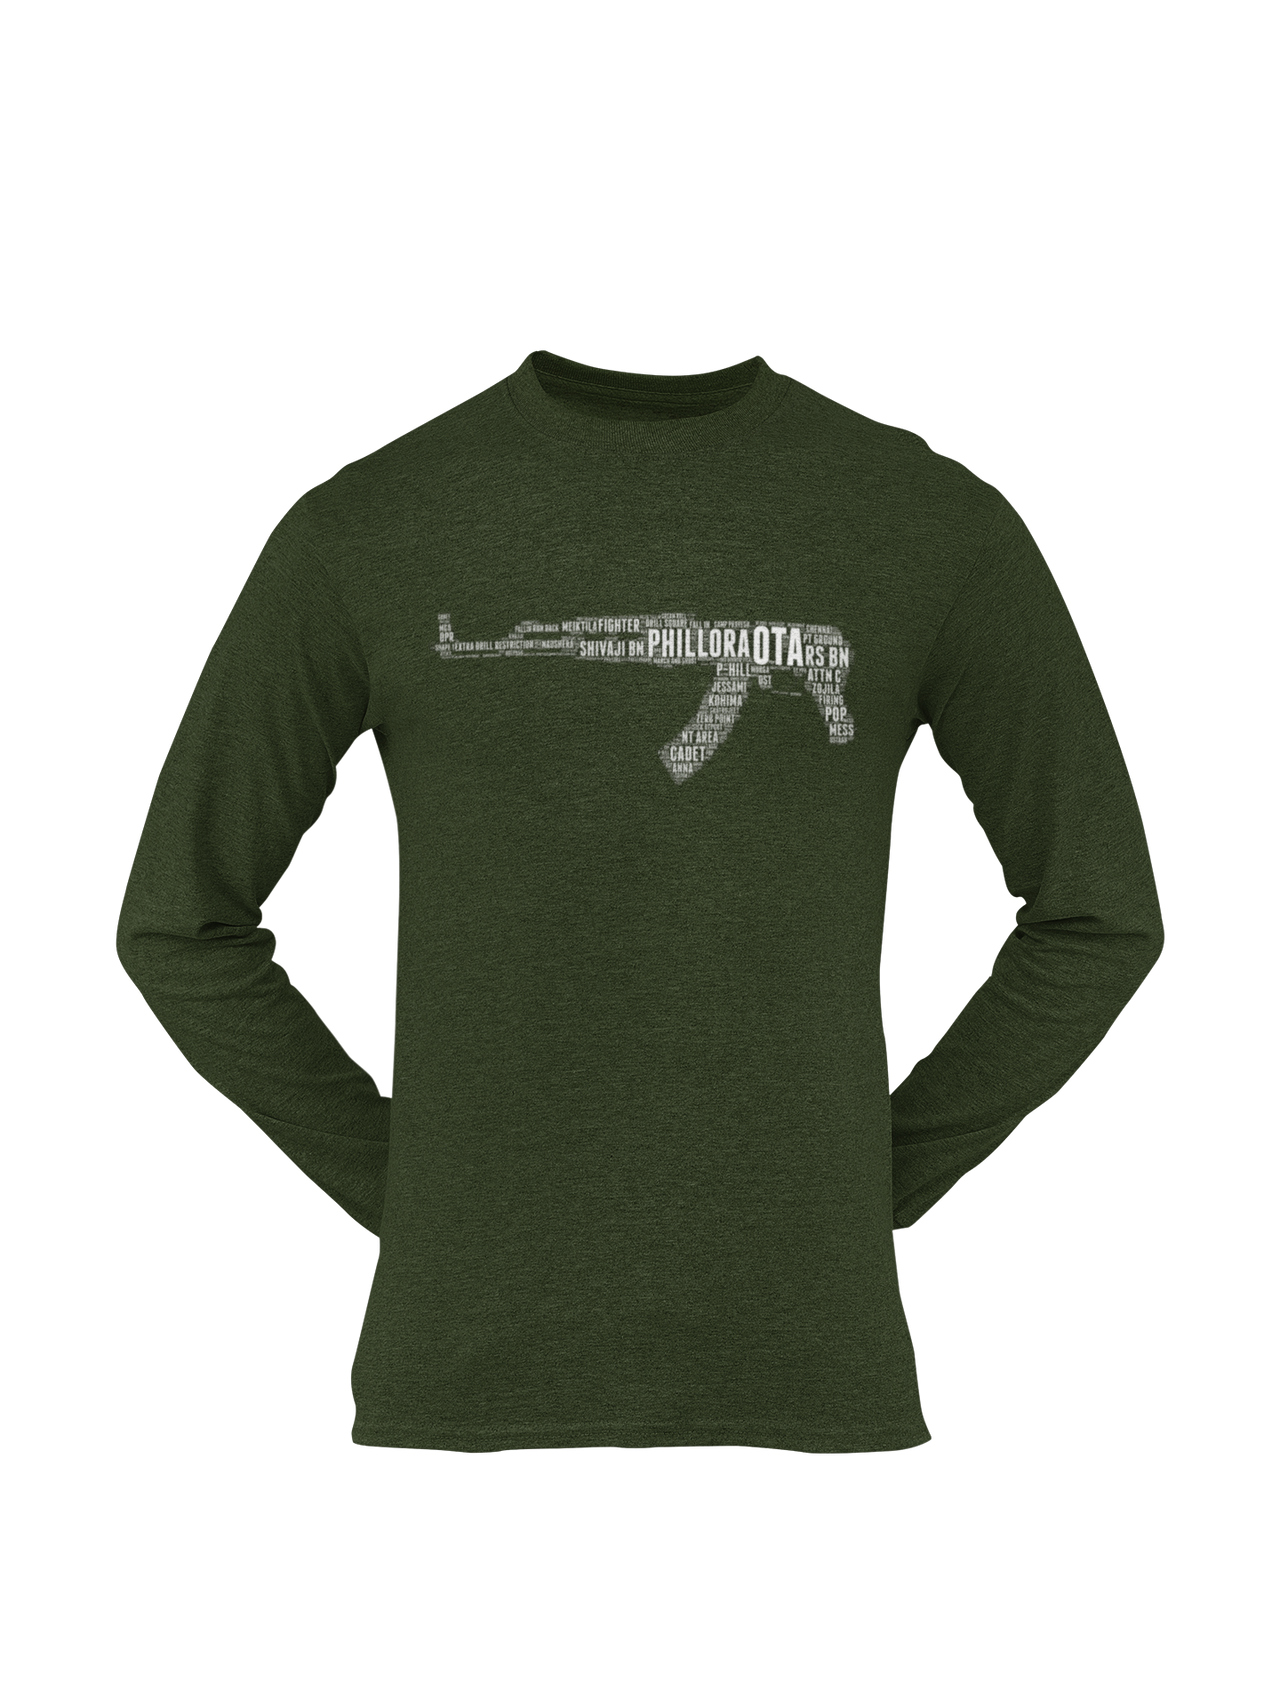 OTA T-shirt - Word Cloud Phillora - AK-47 Folding Stock (Men)